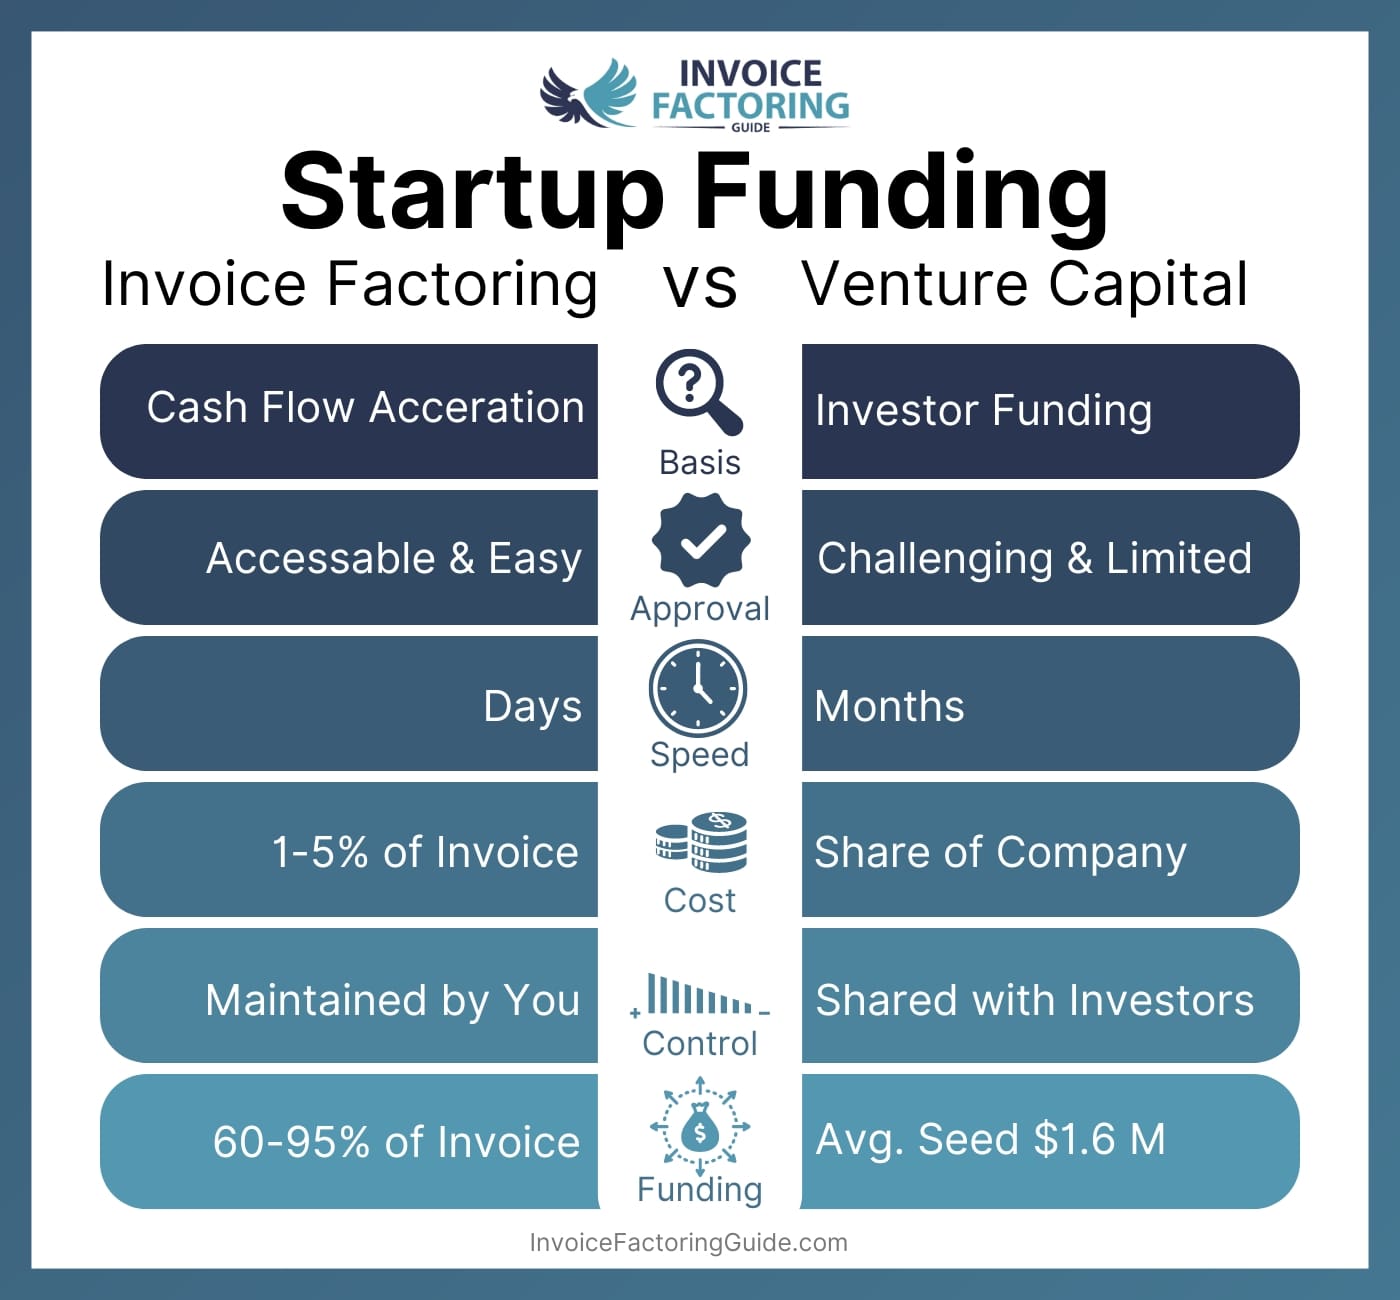 Factoring vs. Venture Capital for Startups